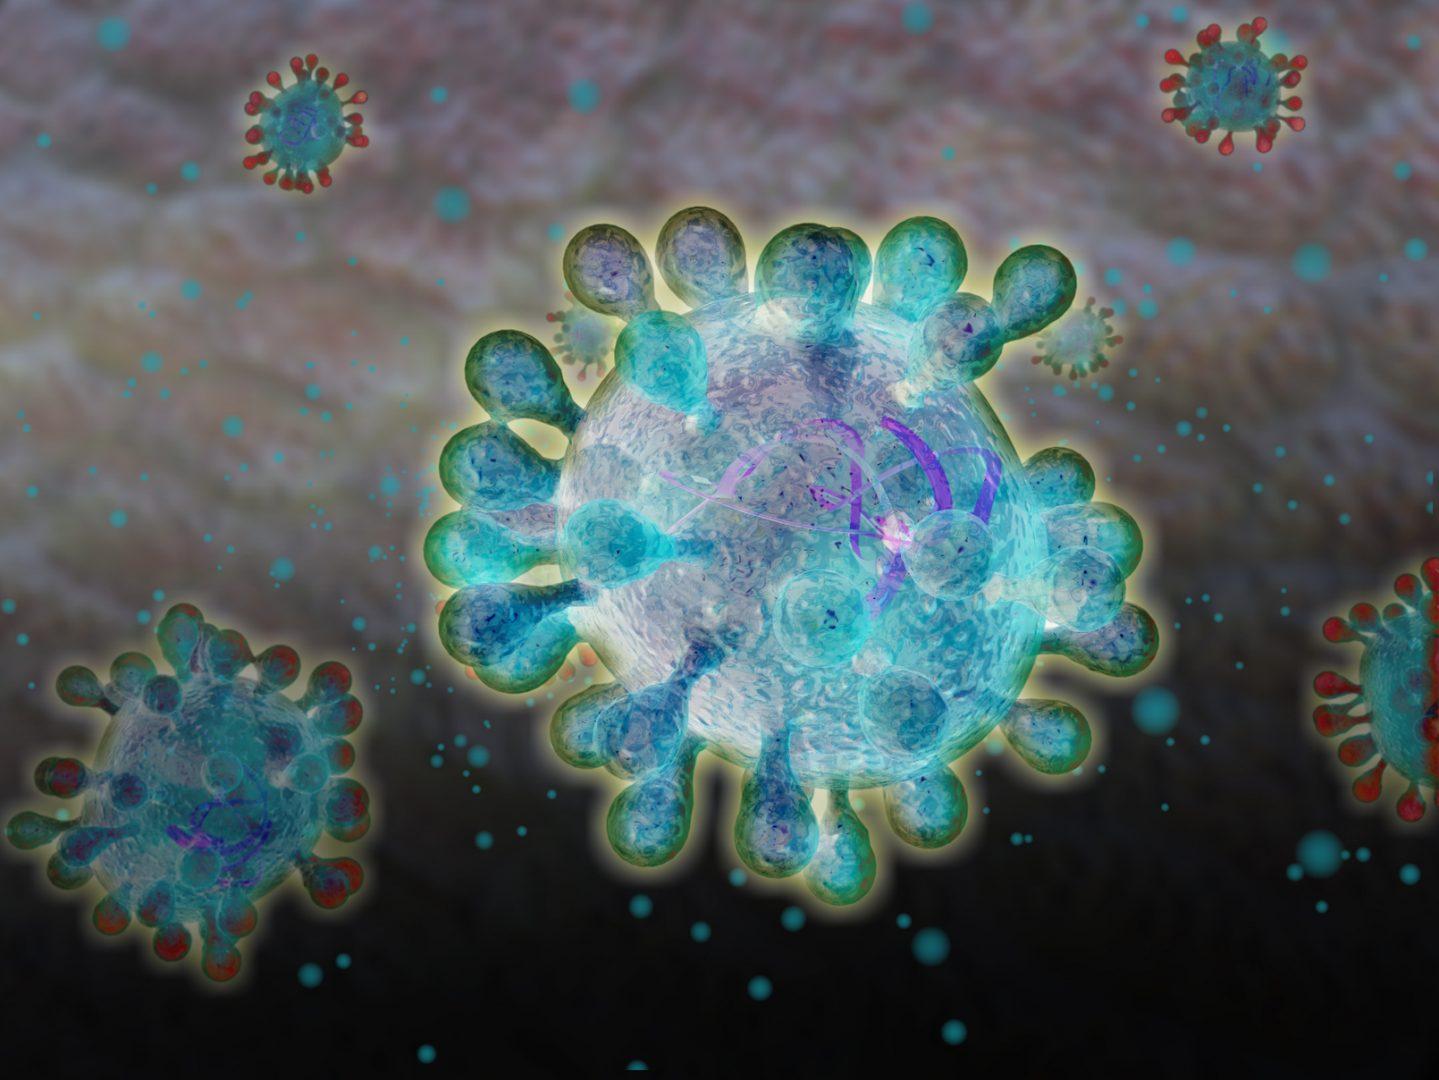 Image of a coronavirus cell.